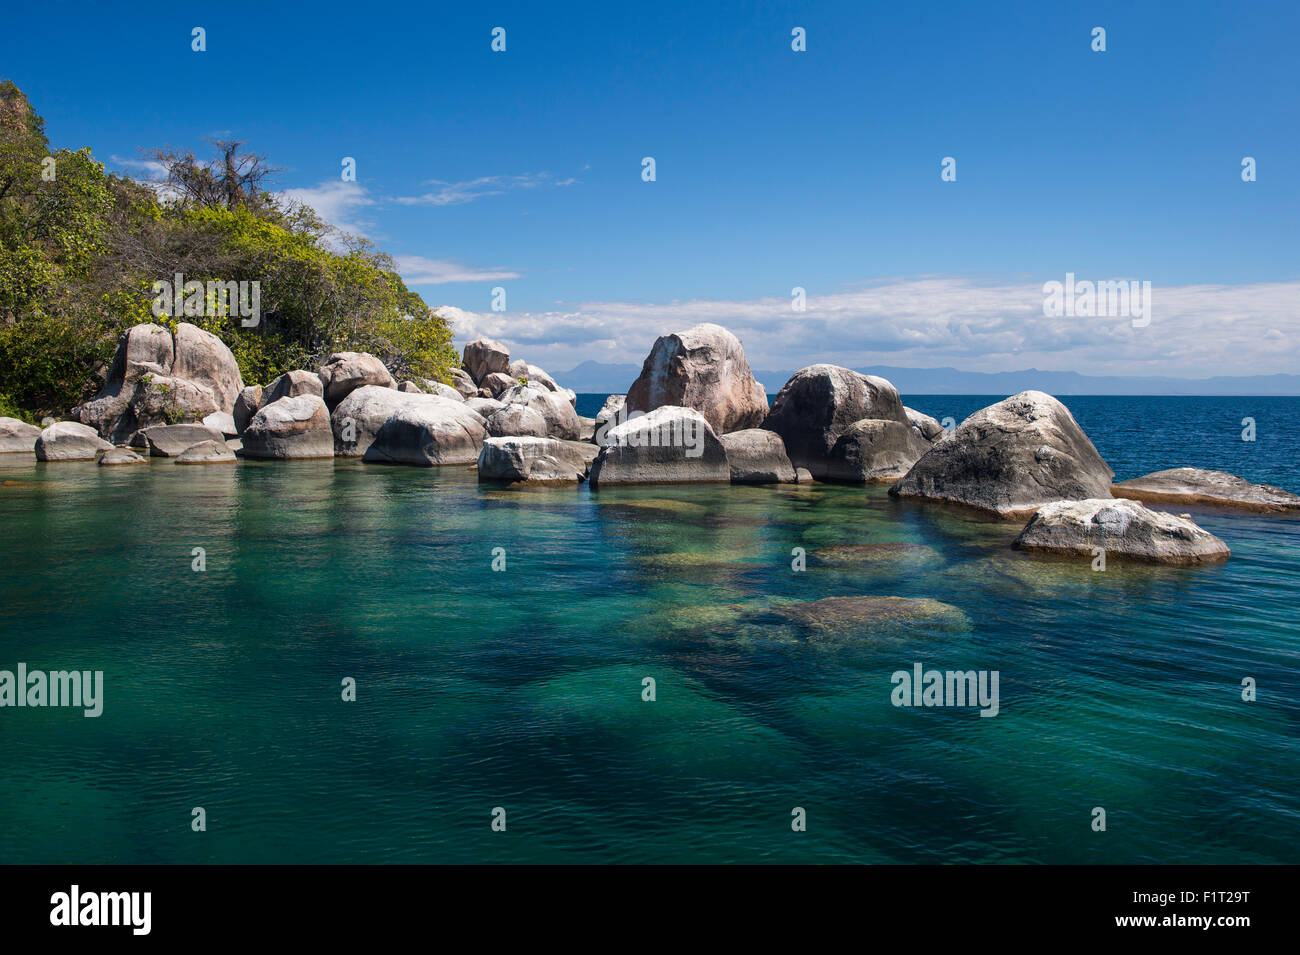 Aguas turquesas y rocas de granito, Isla de Mumbo, Cape Maclear, Lago Malawi, Malawi, Africa. Foto de stock